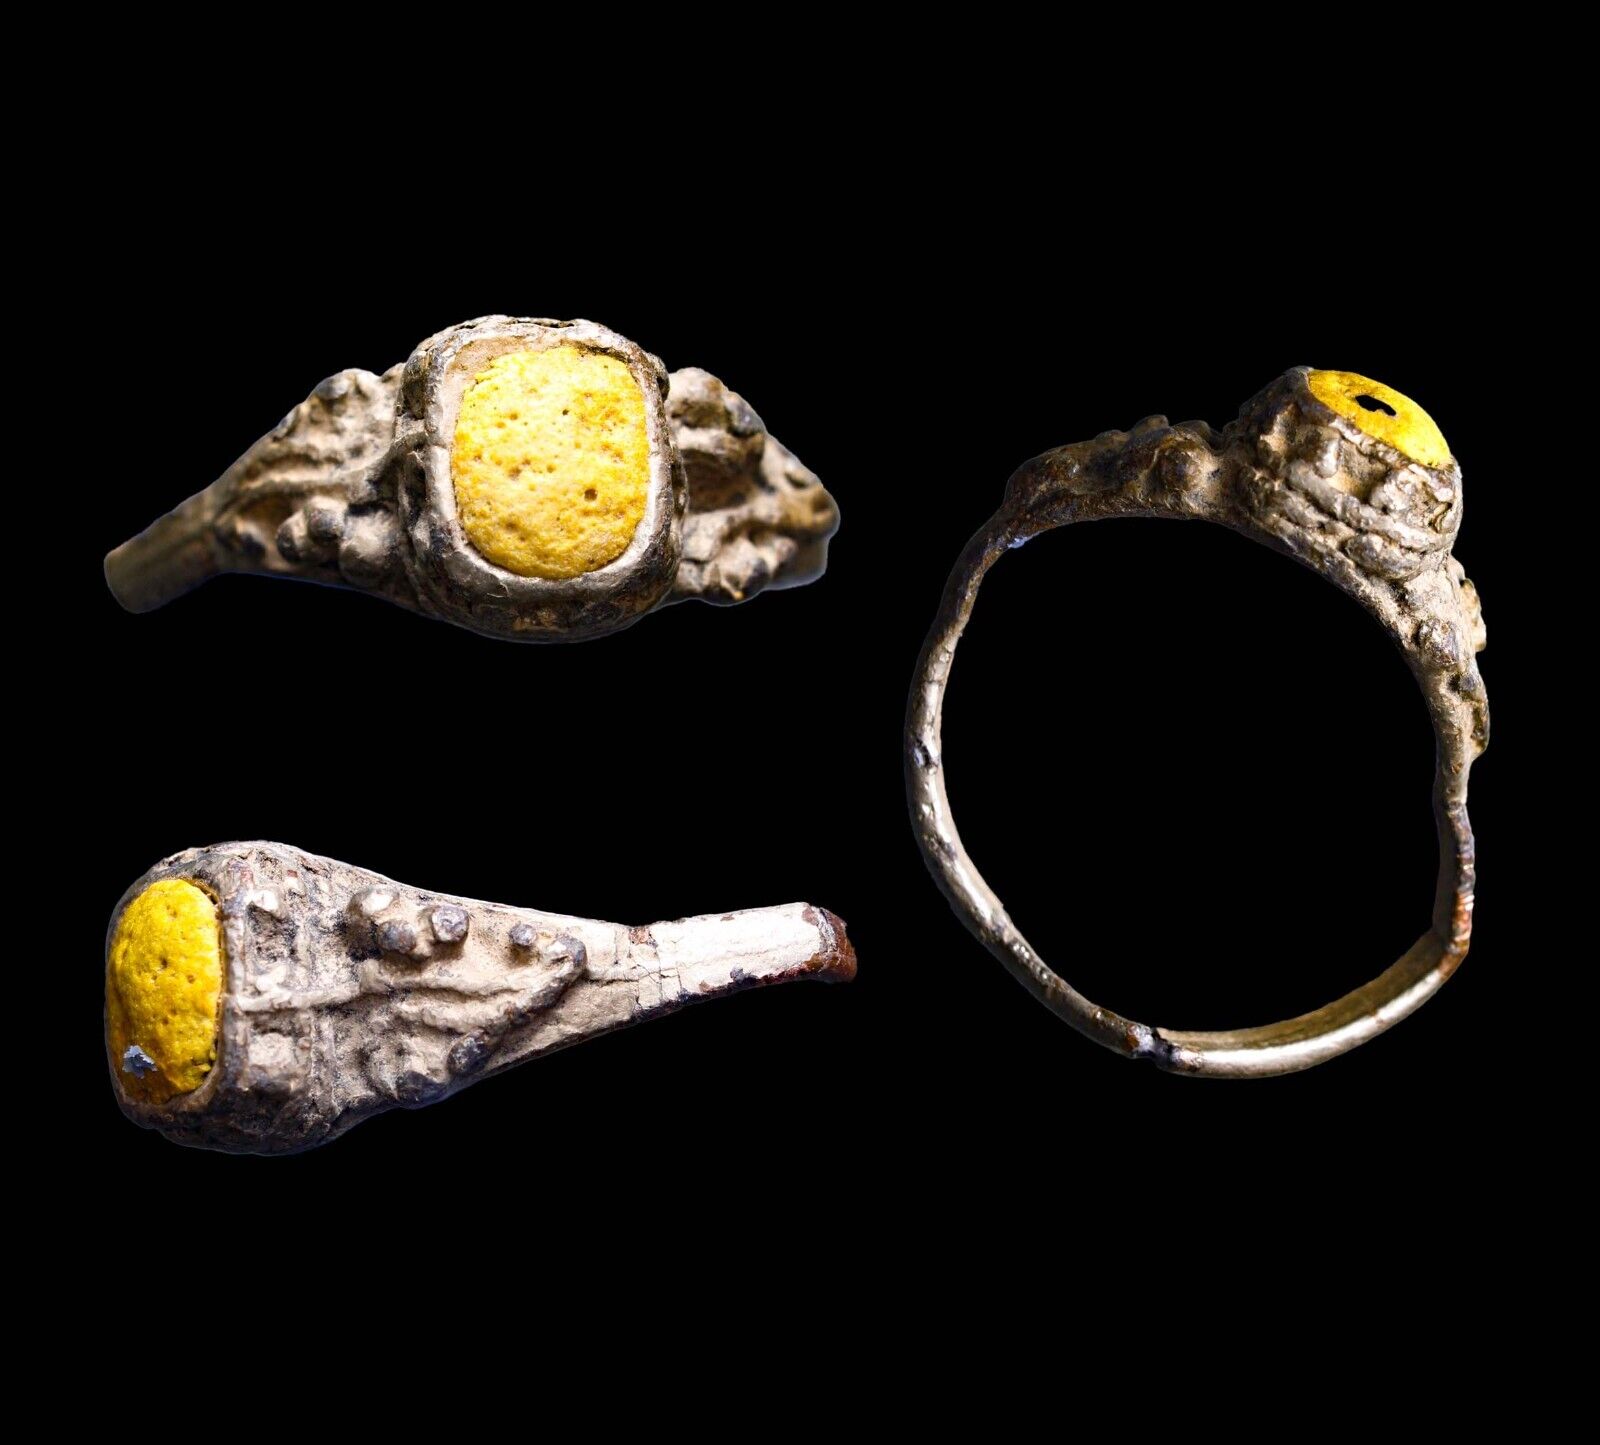 RR CRUSADER Knight Templar Silver Ring Precious Stone Yellow Artifact Antiquity